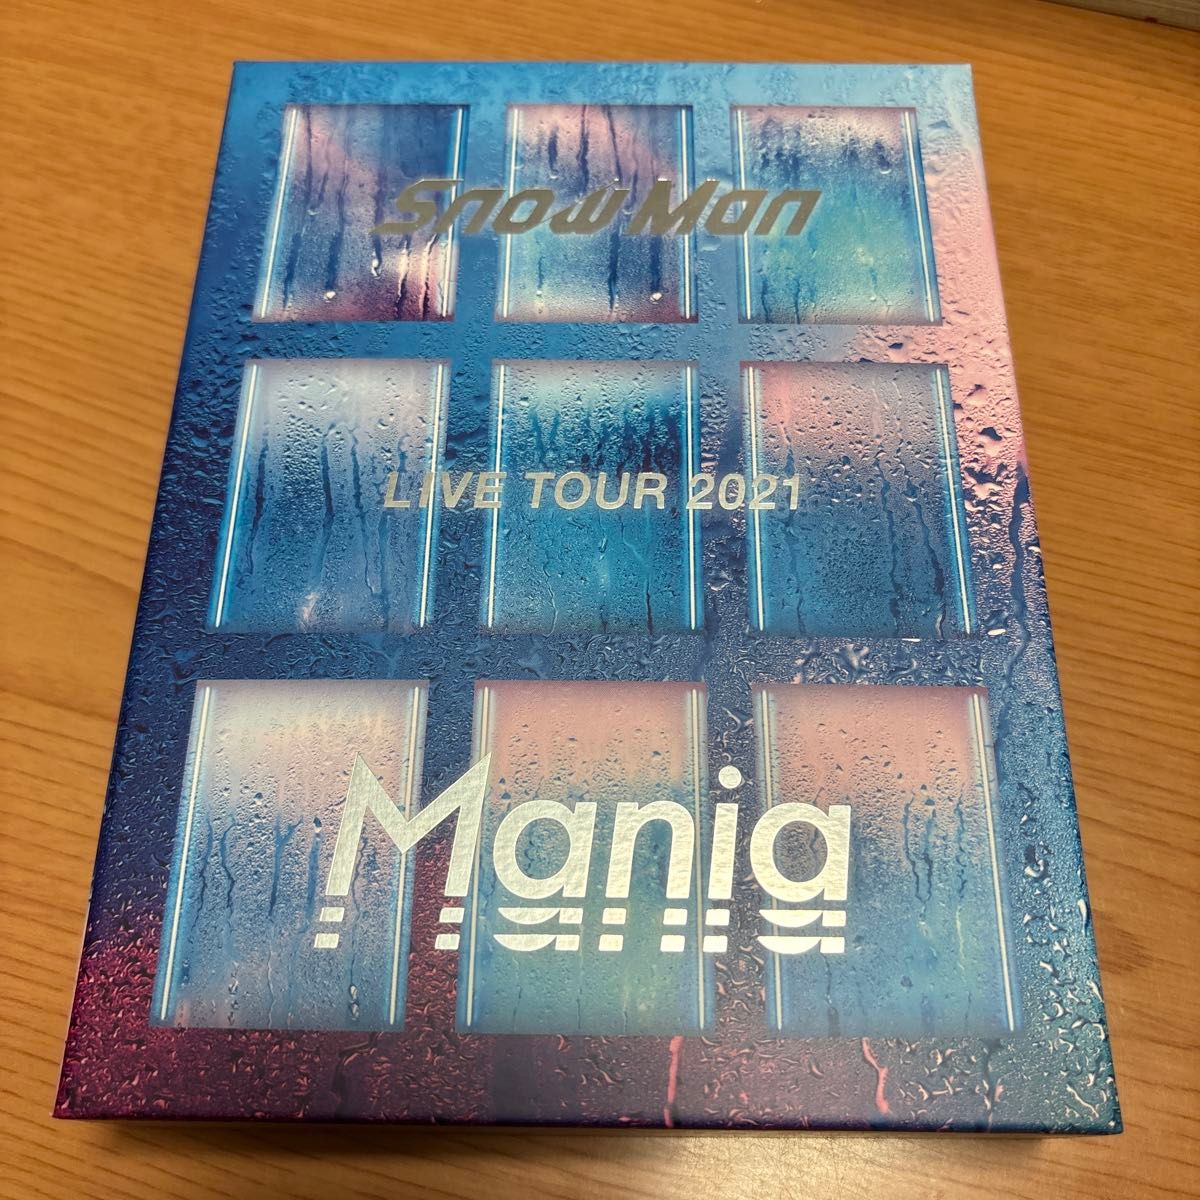 Snow Man LIVE TOUR Mania 2021  Blu-ray